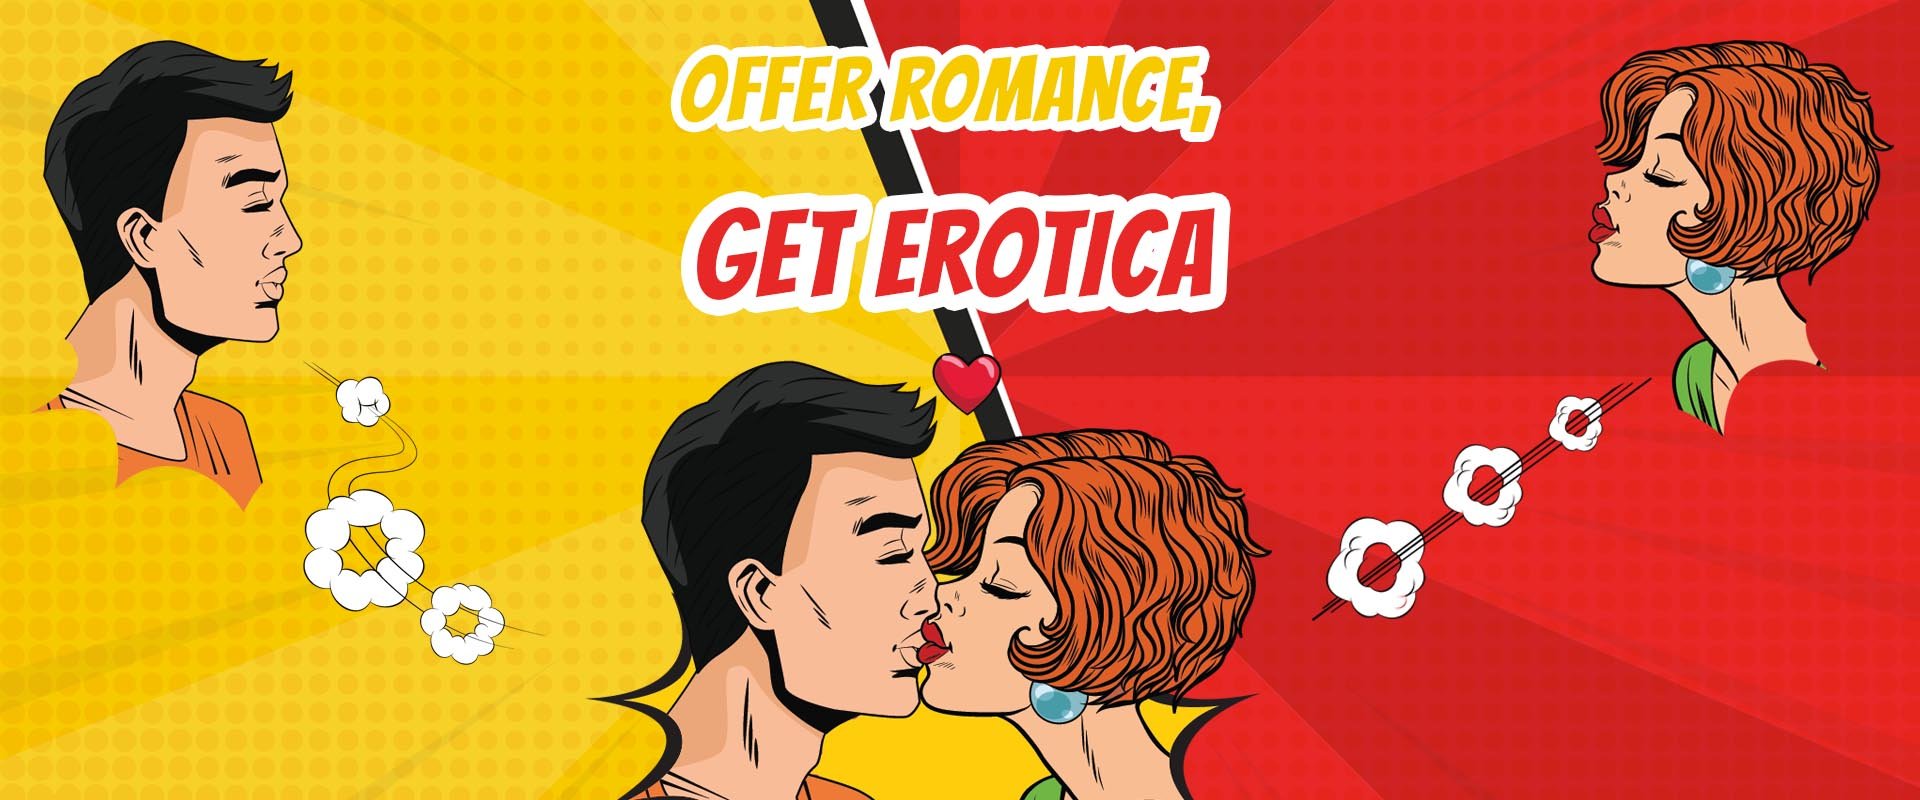 offer romance get erotica